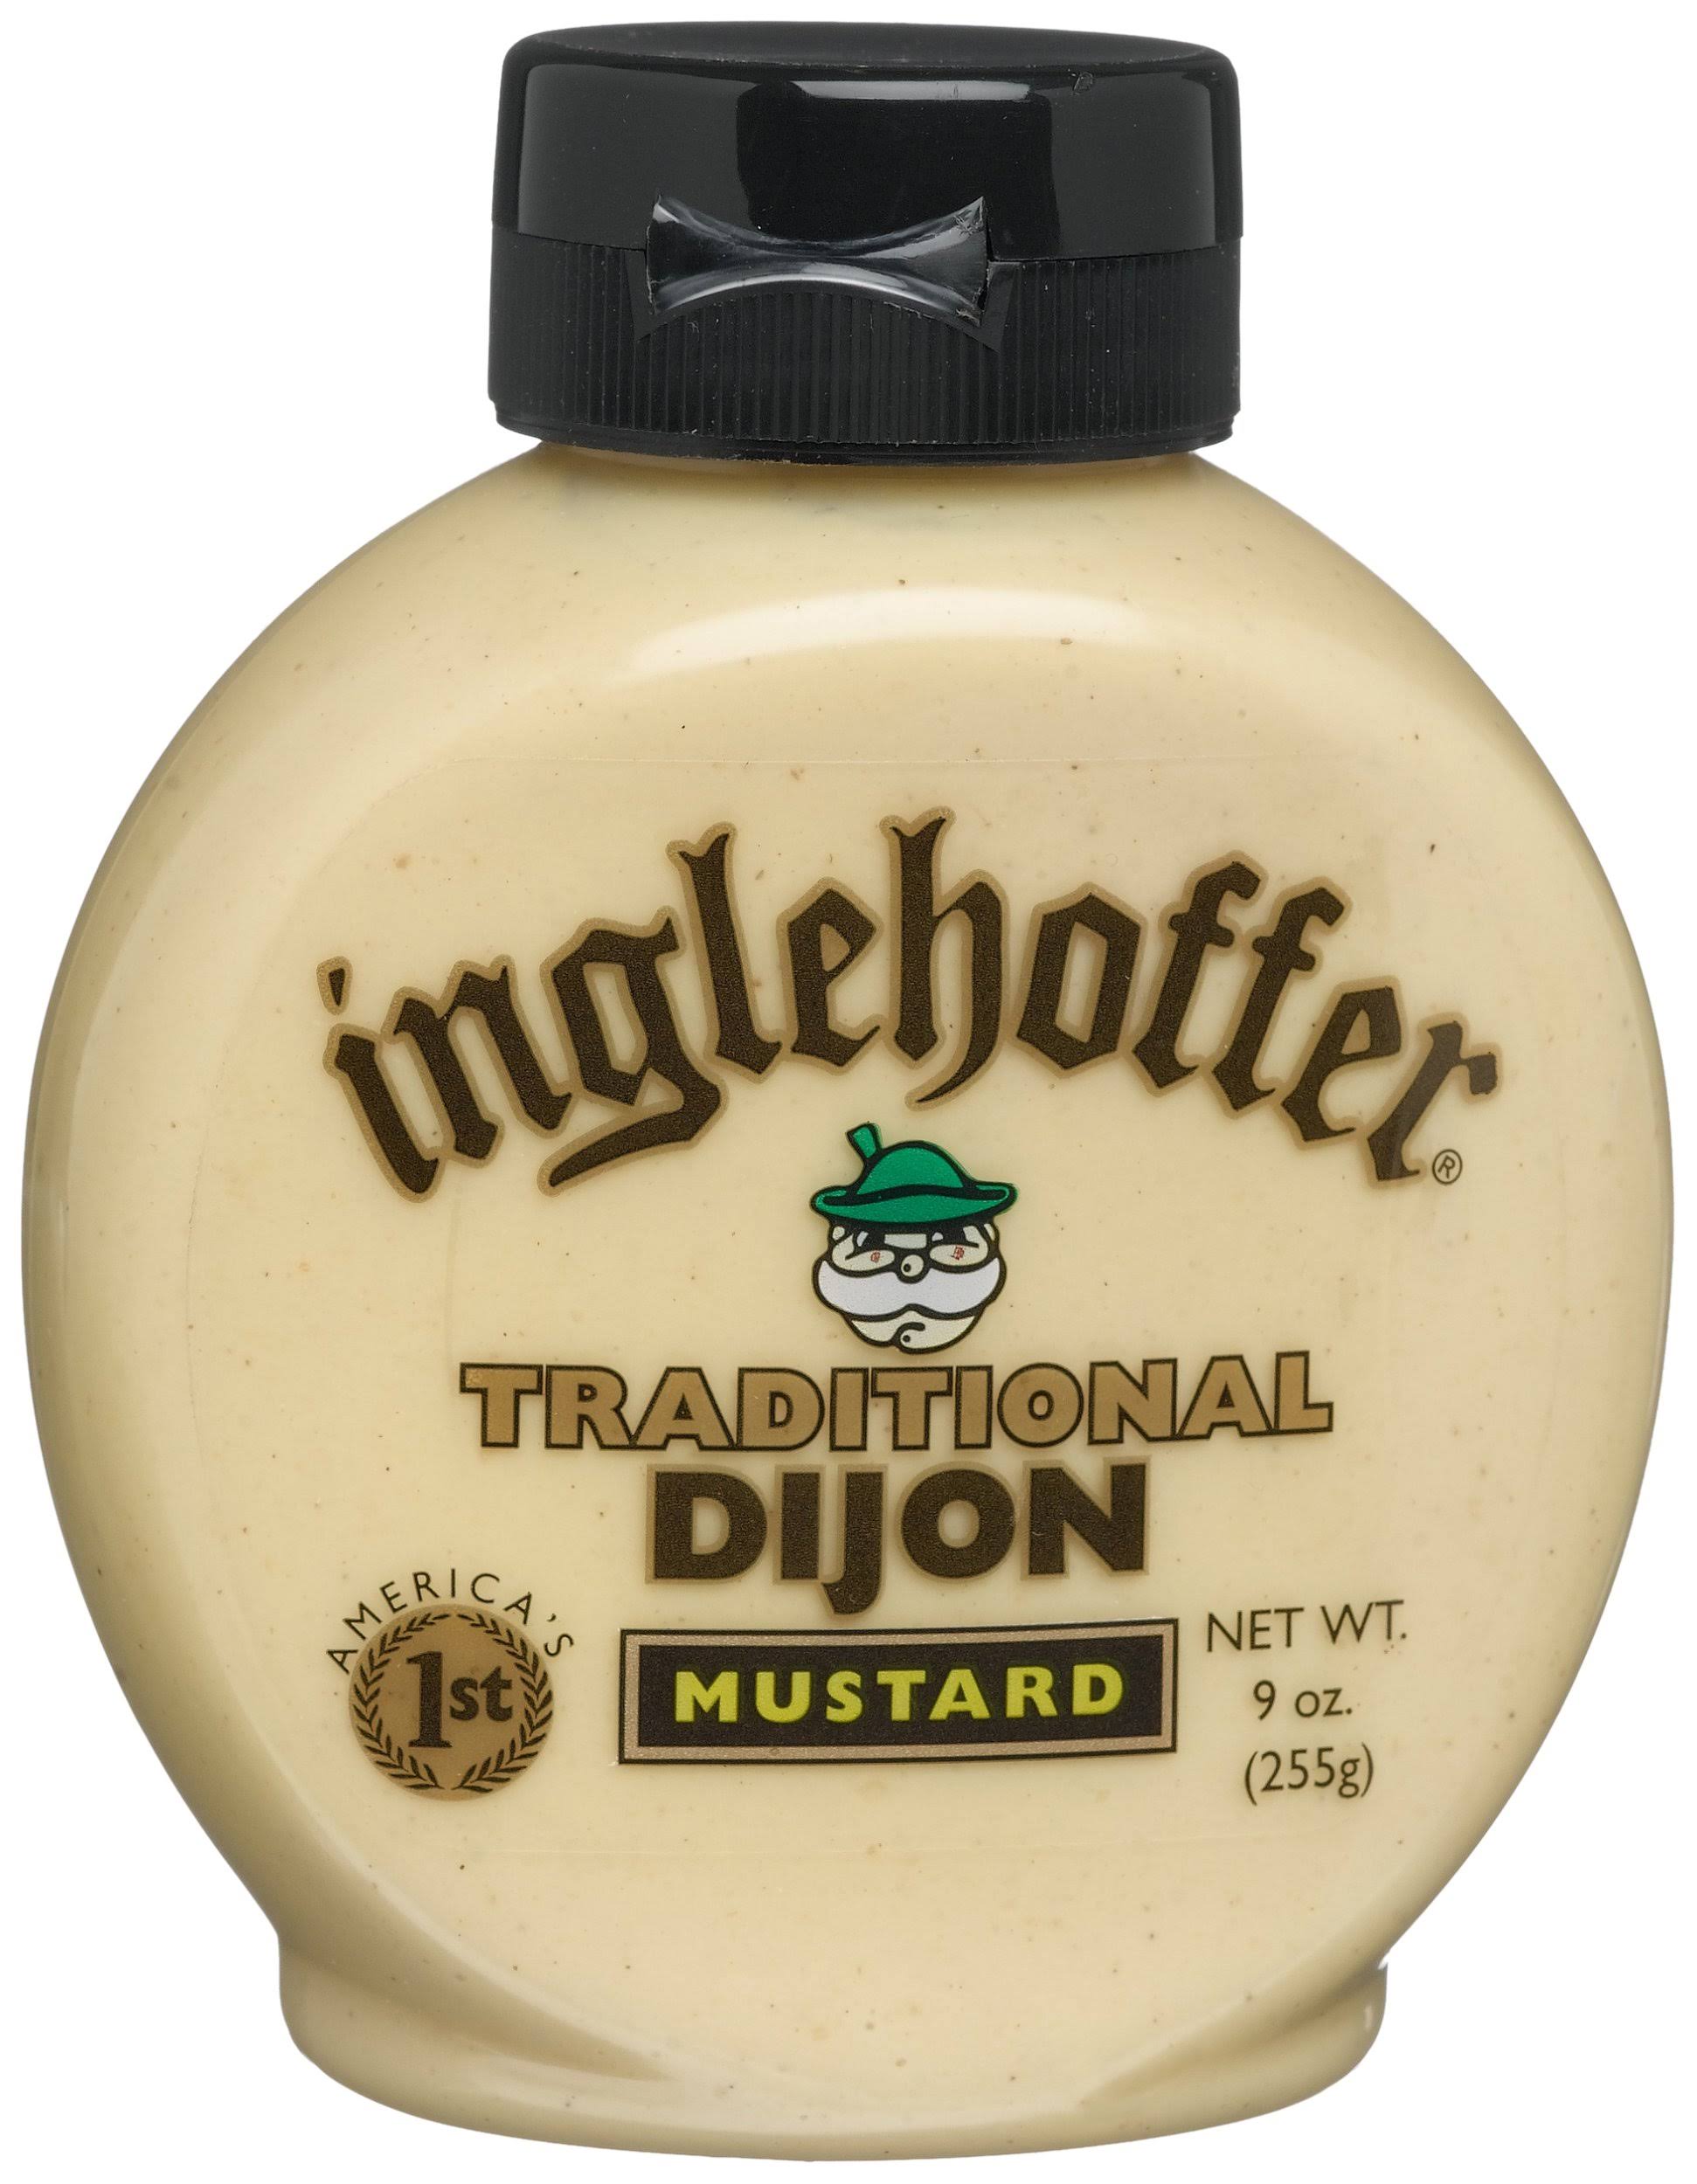 Inglehoffer Traditional Dijon Mustard - 9oz